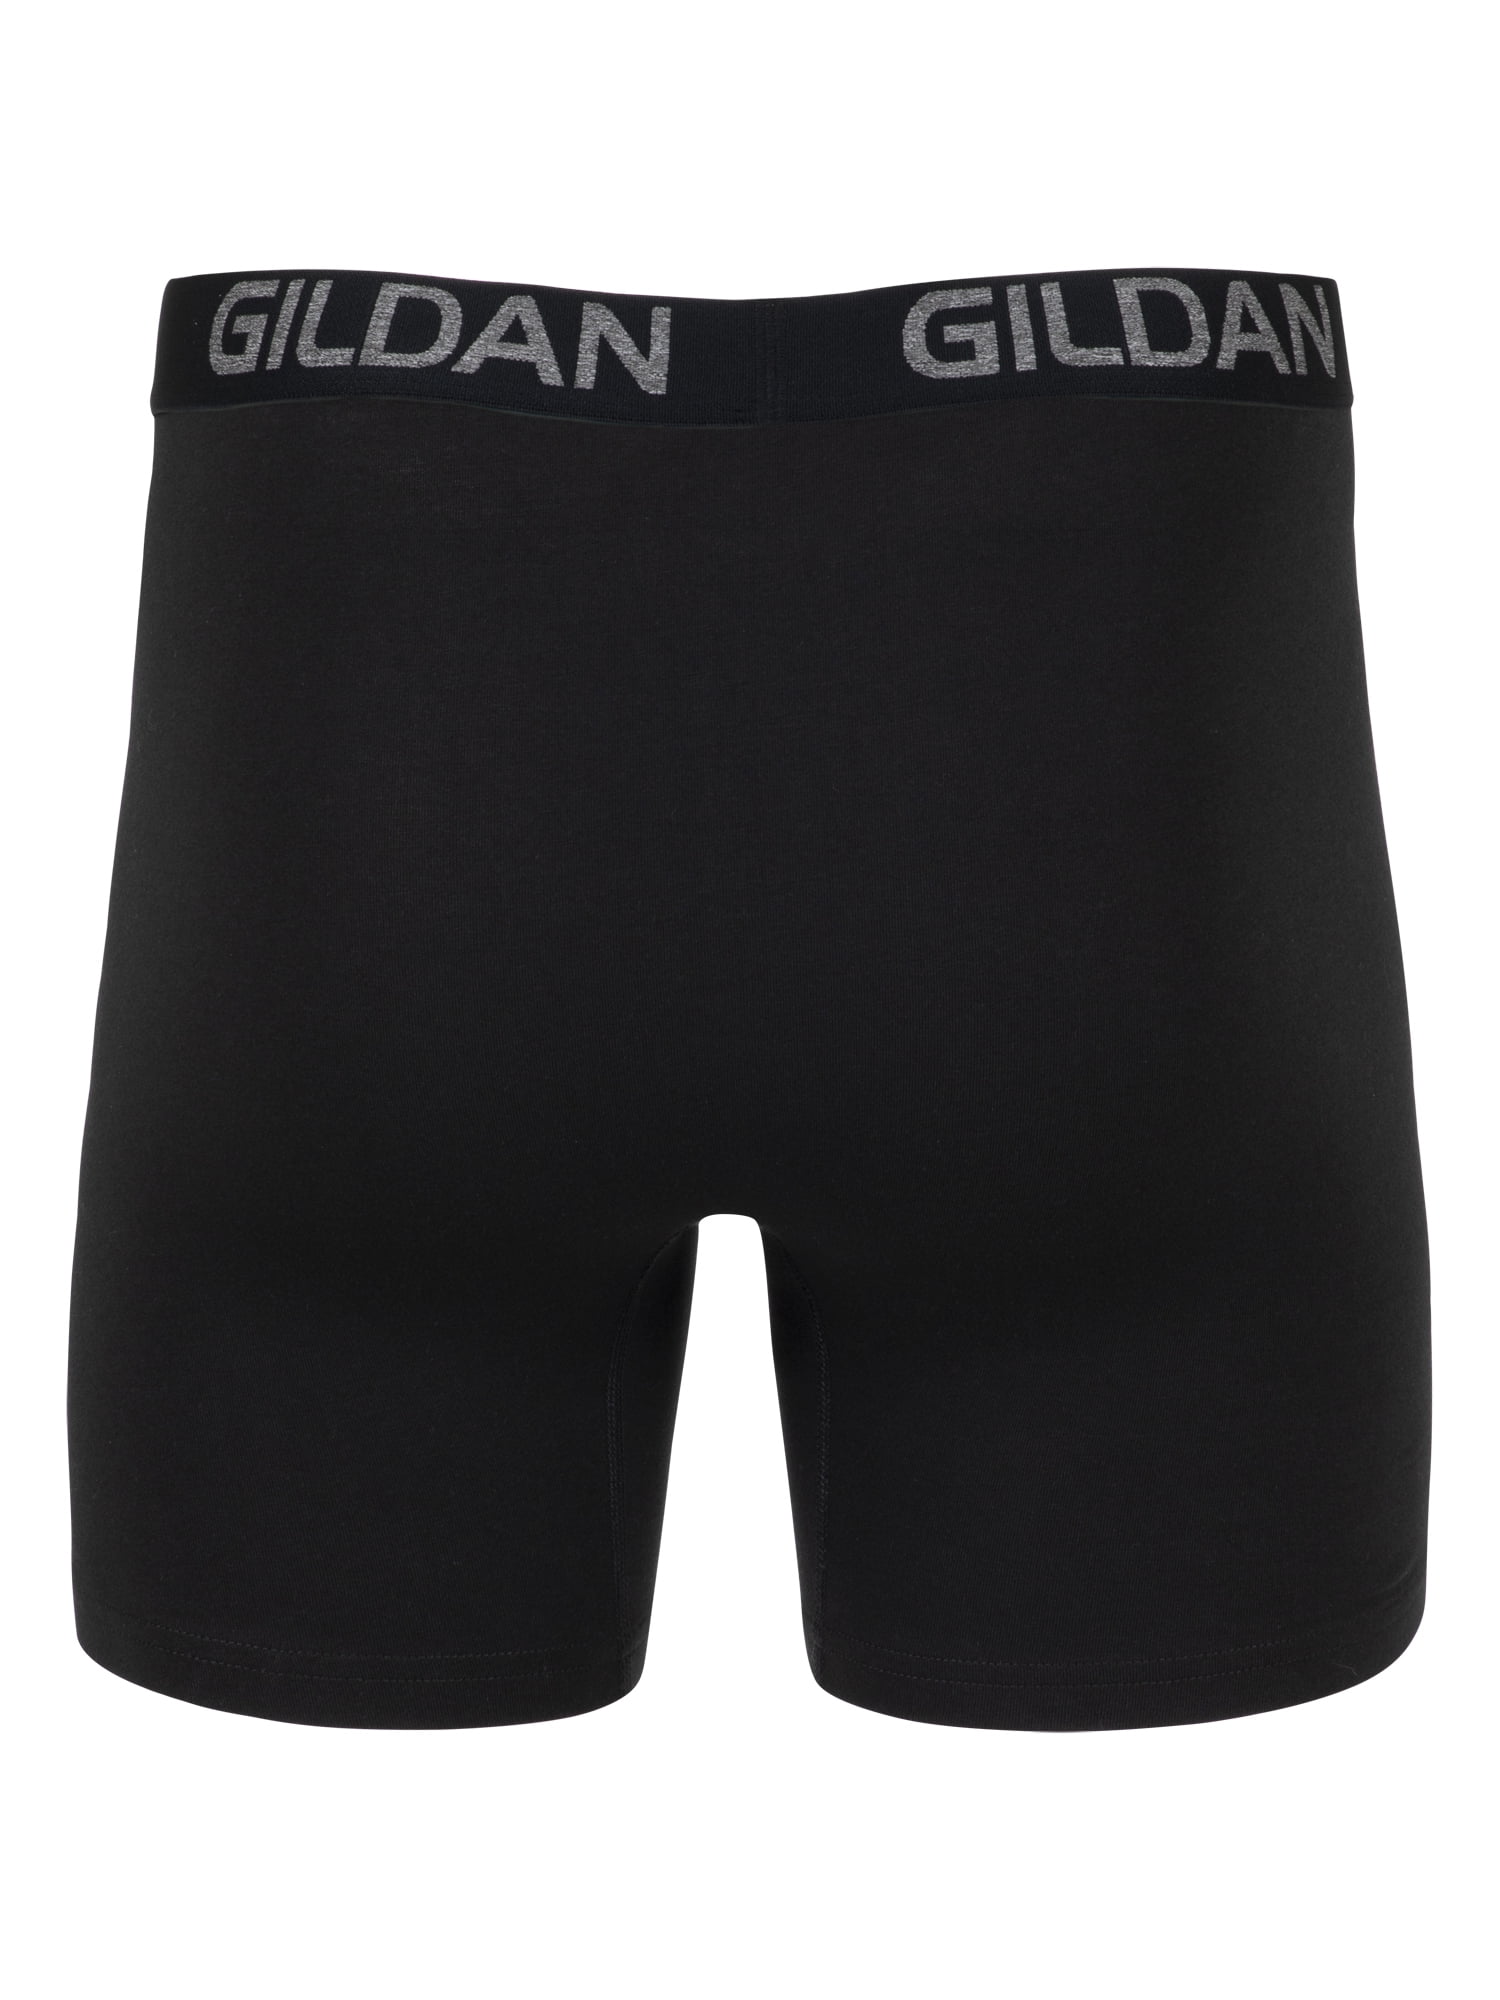 Gildan Men's Cotton Stretch Regular Leg Boxer Briefs, 5-Pack, Sizes